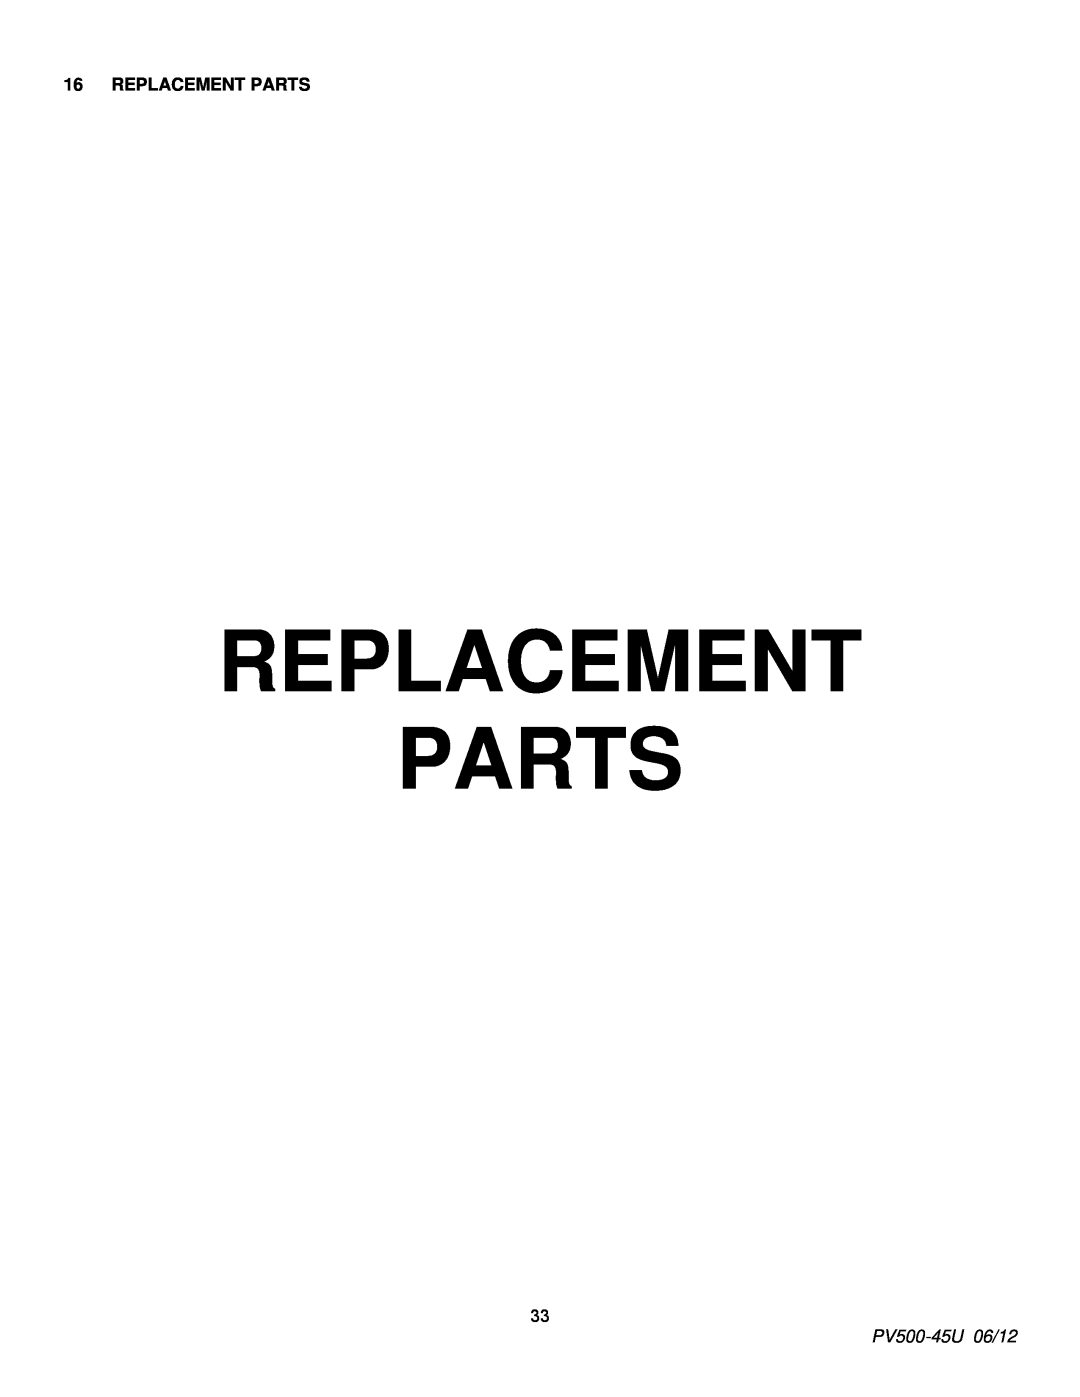 PVI Industries manual Replacement Parts, PV500-45U06/12 